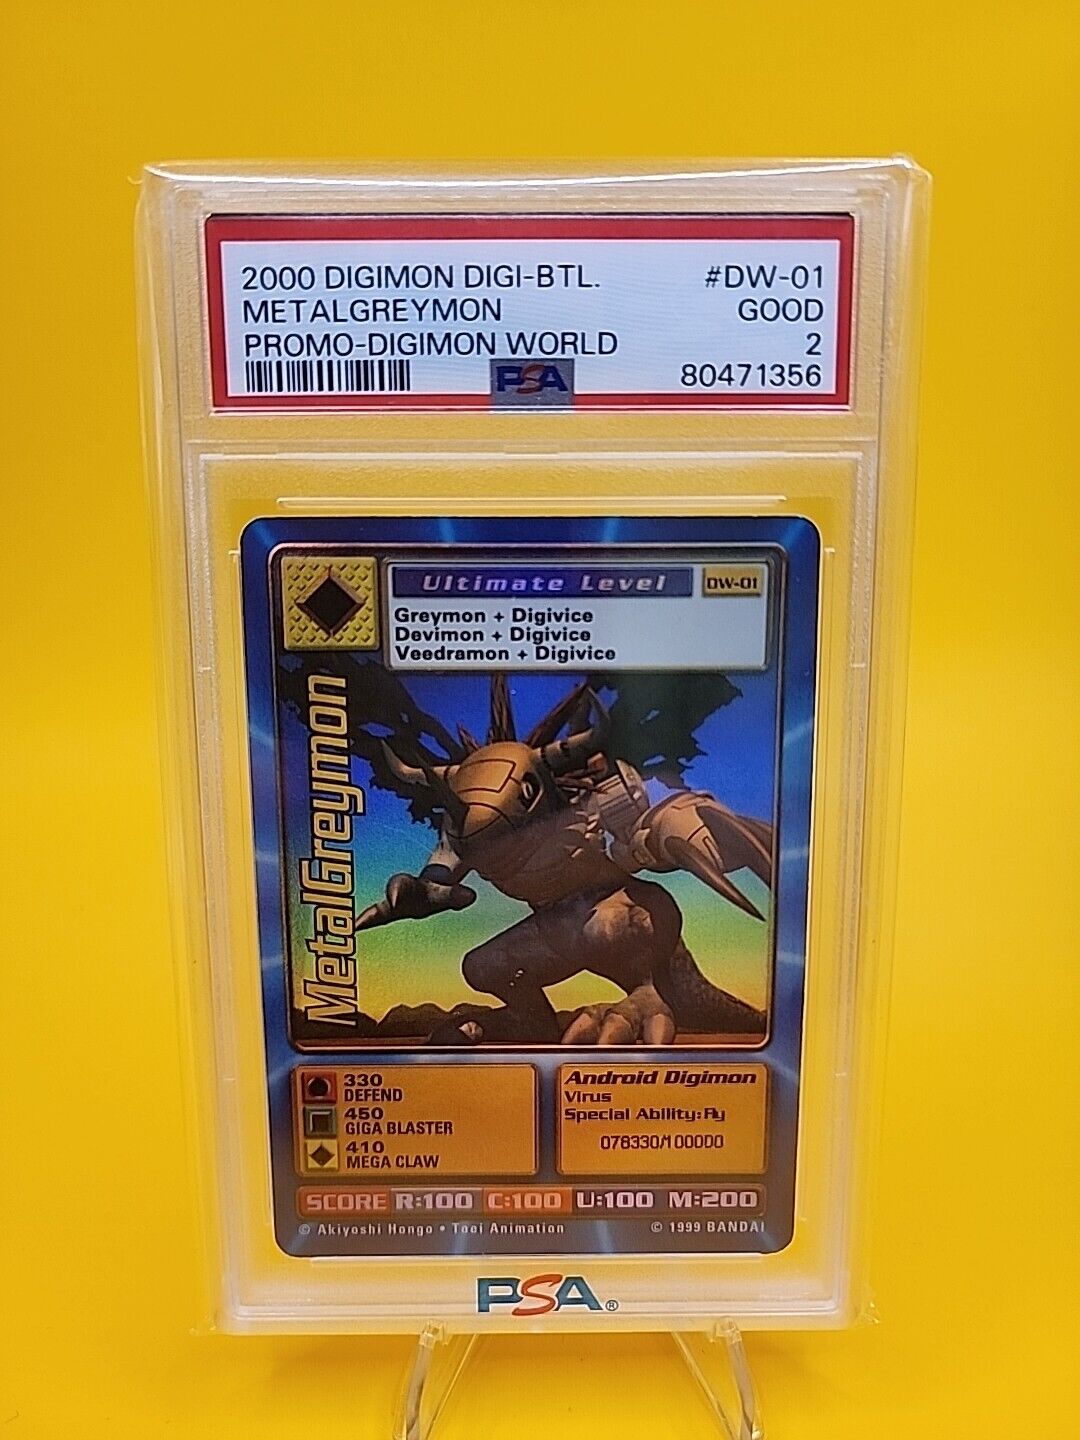 Digimon World PlayStation Promo DW-01 MetalGreymon - number 078330 / 100,000